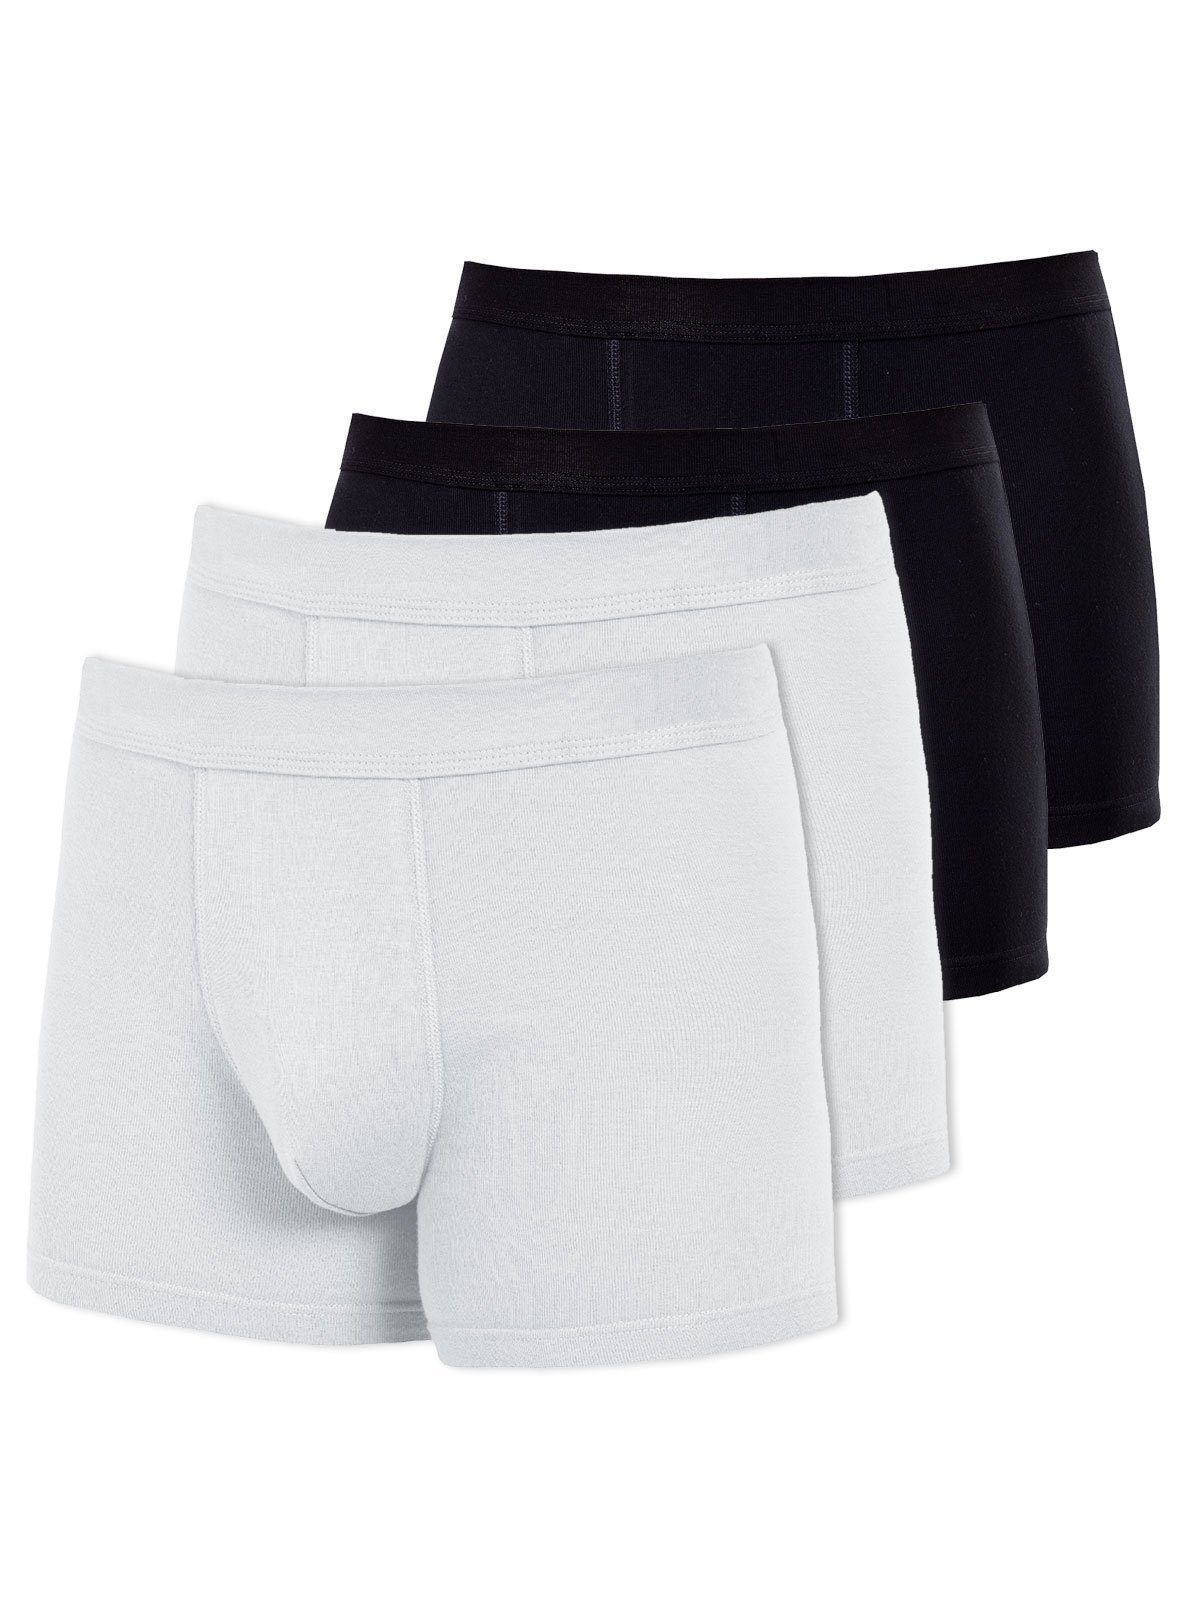 KUMPF Retro Pants 4er Sparpack Herren Pants Bio Cotton (Spar-Set, 4-St) - weiss schwarz